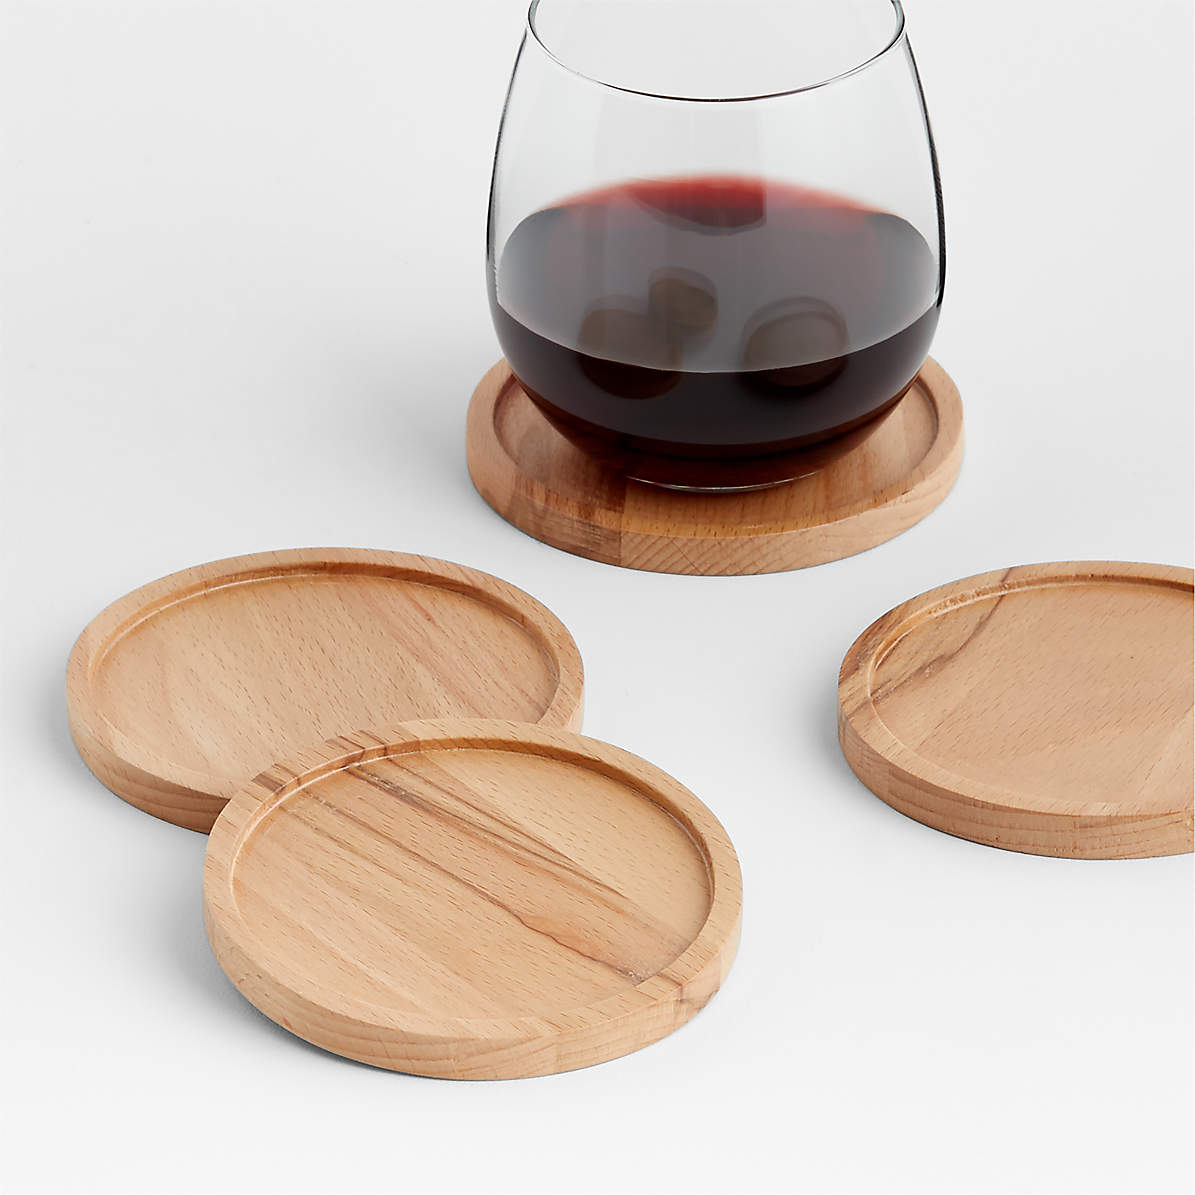 4 pcs/set Wooden Coasters for Drinks - Black Walnut Wood Drink